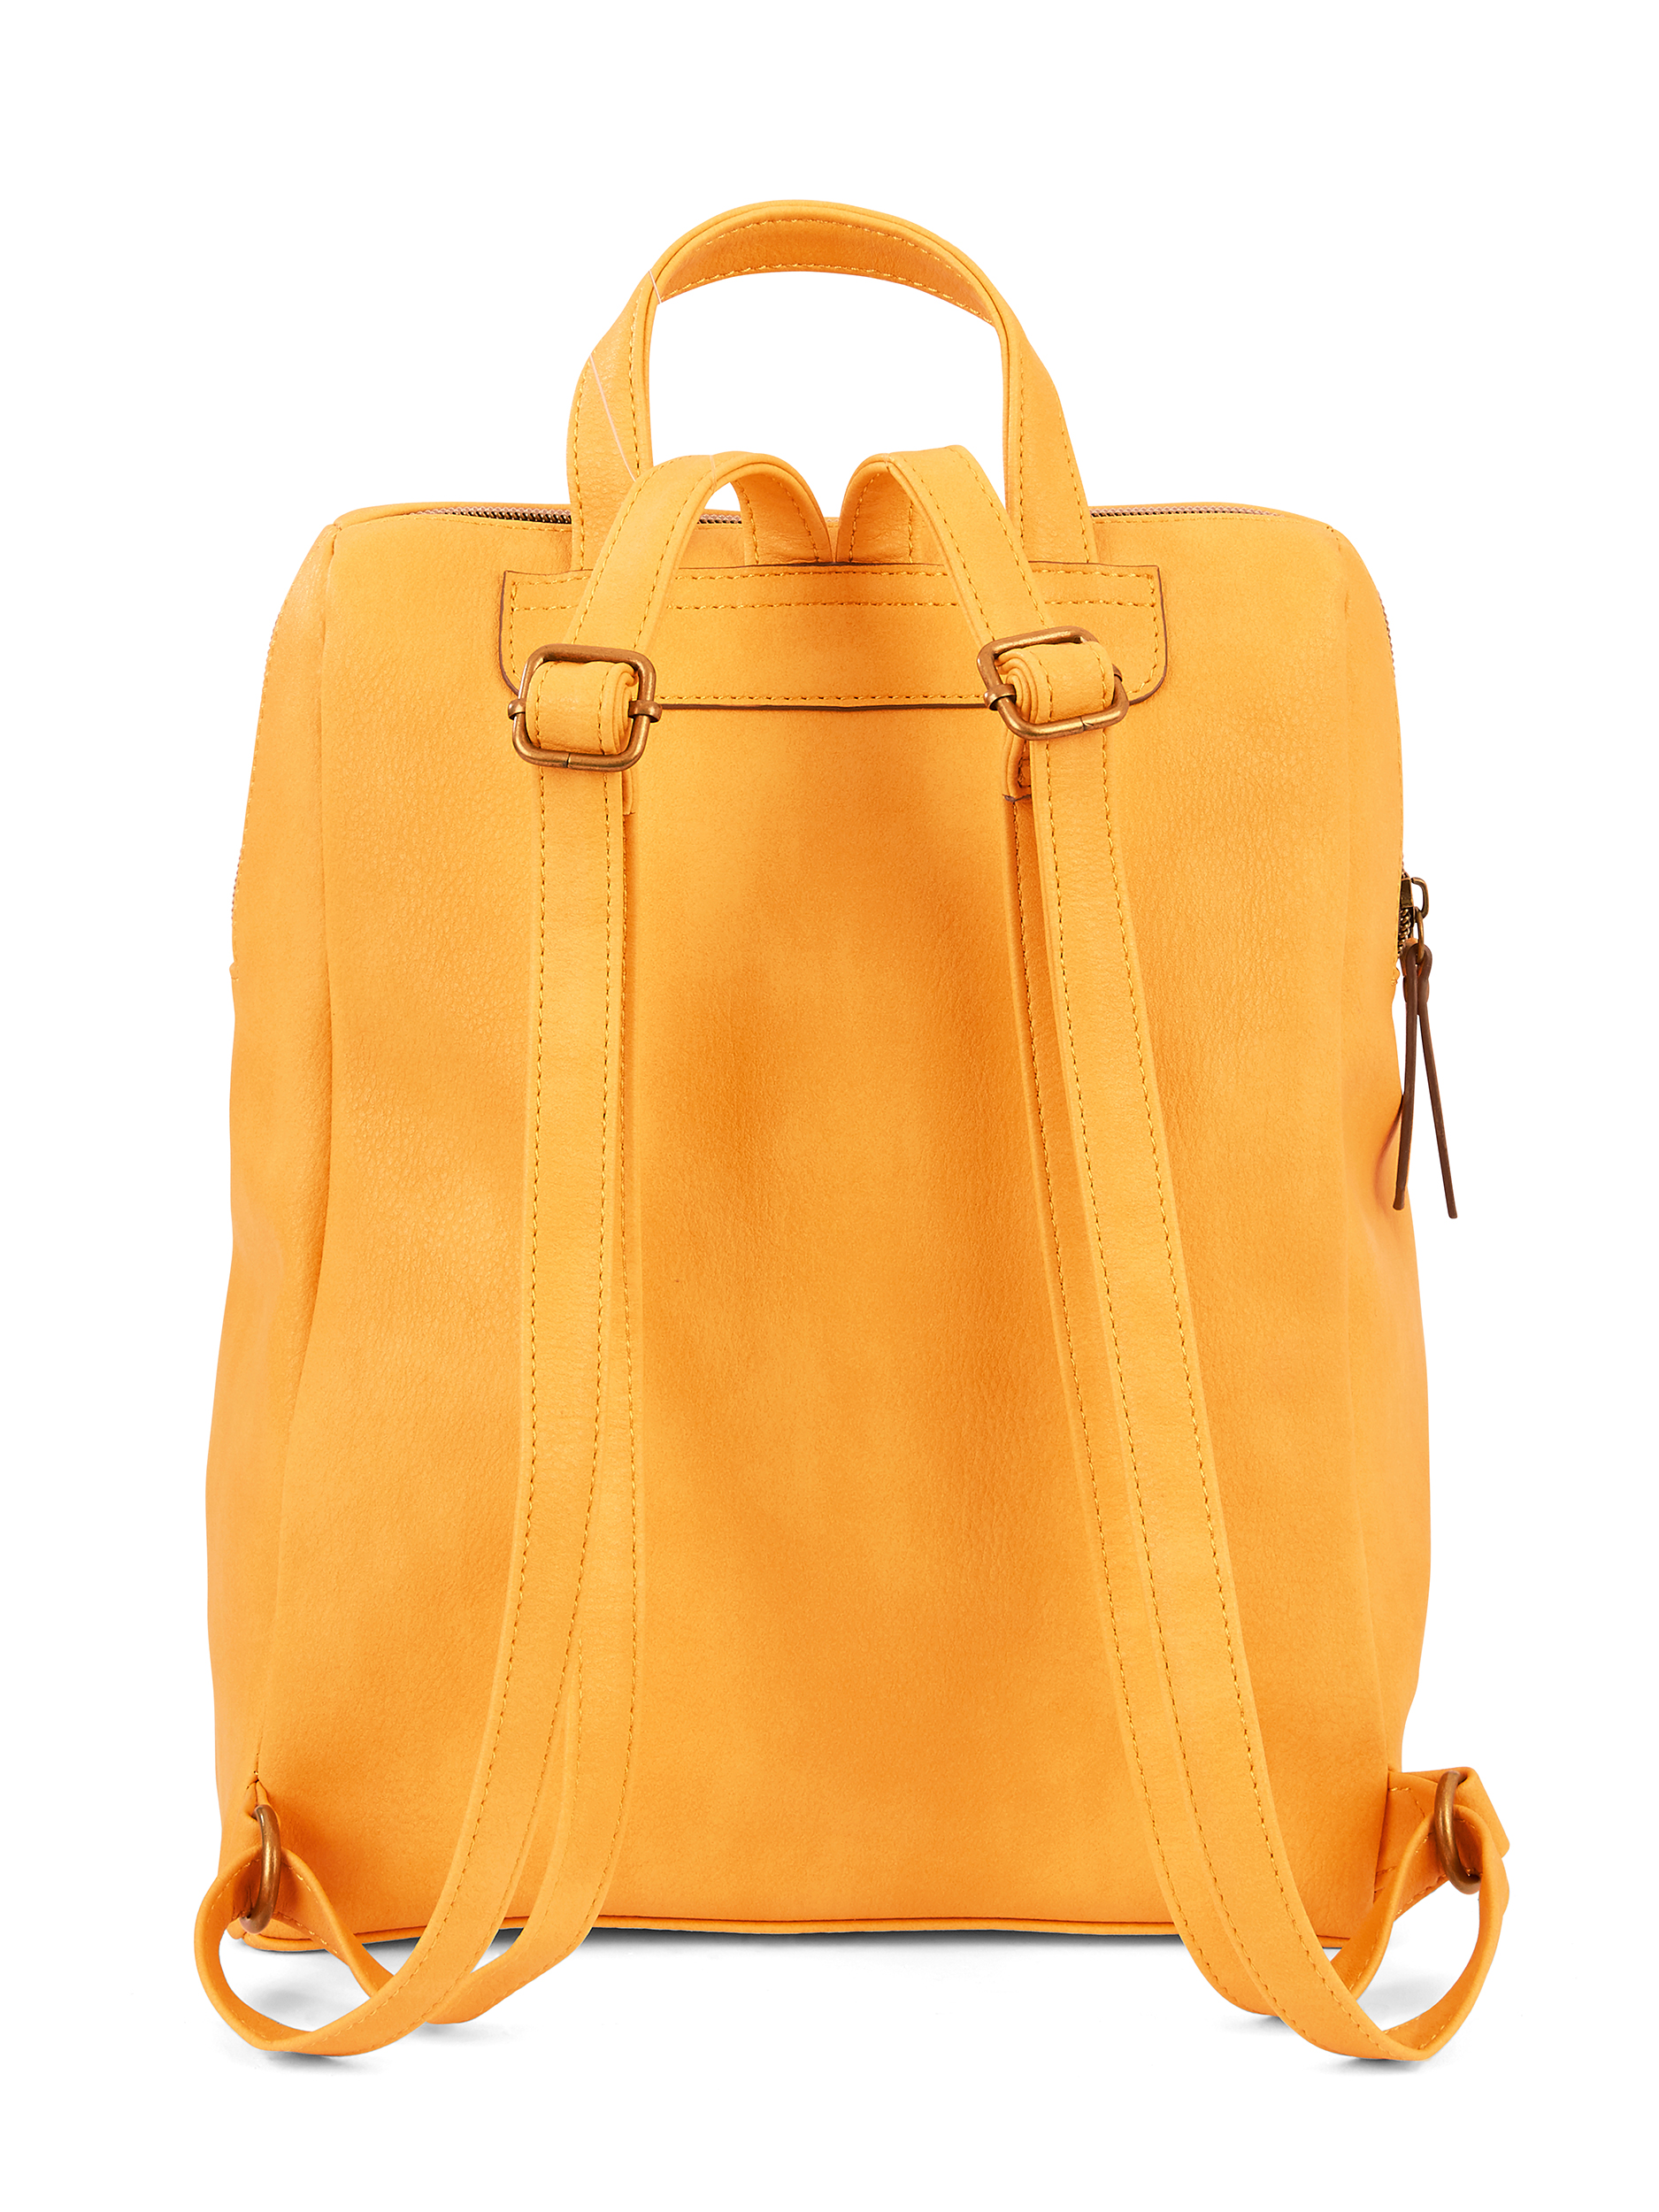 Time & Tru Cucamonga Backpack, Mustard - image 4 of 4